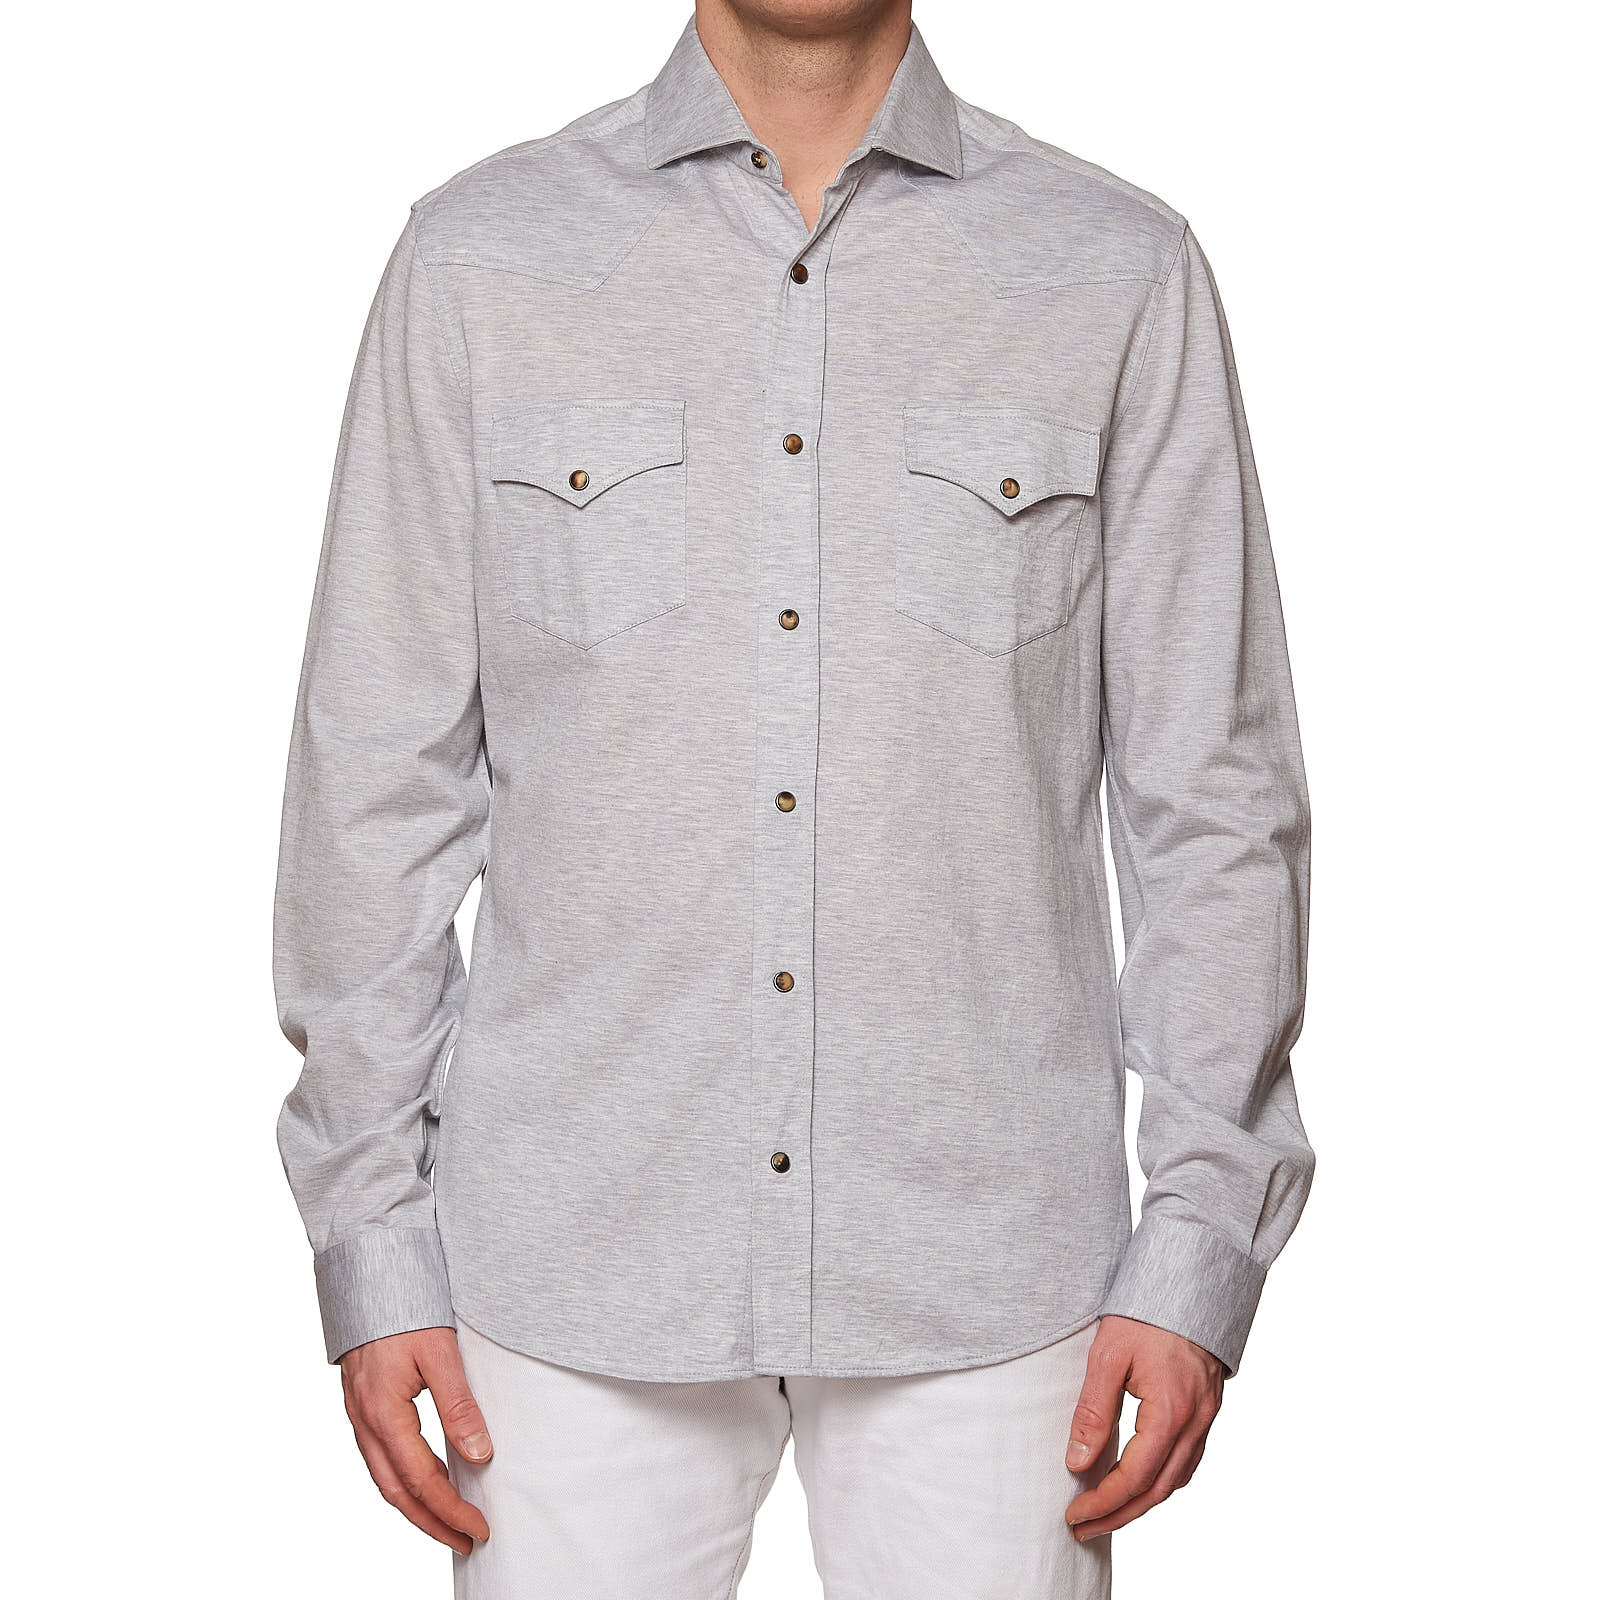 BRUNELLO CUCINELLI Gray Cotton Cutaway Collar Leisure Fit Casual Shirt NEW XL BRUNELLO CUCINELLI